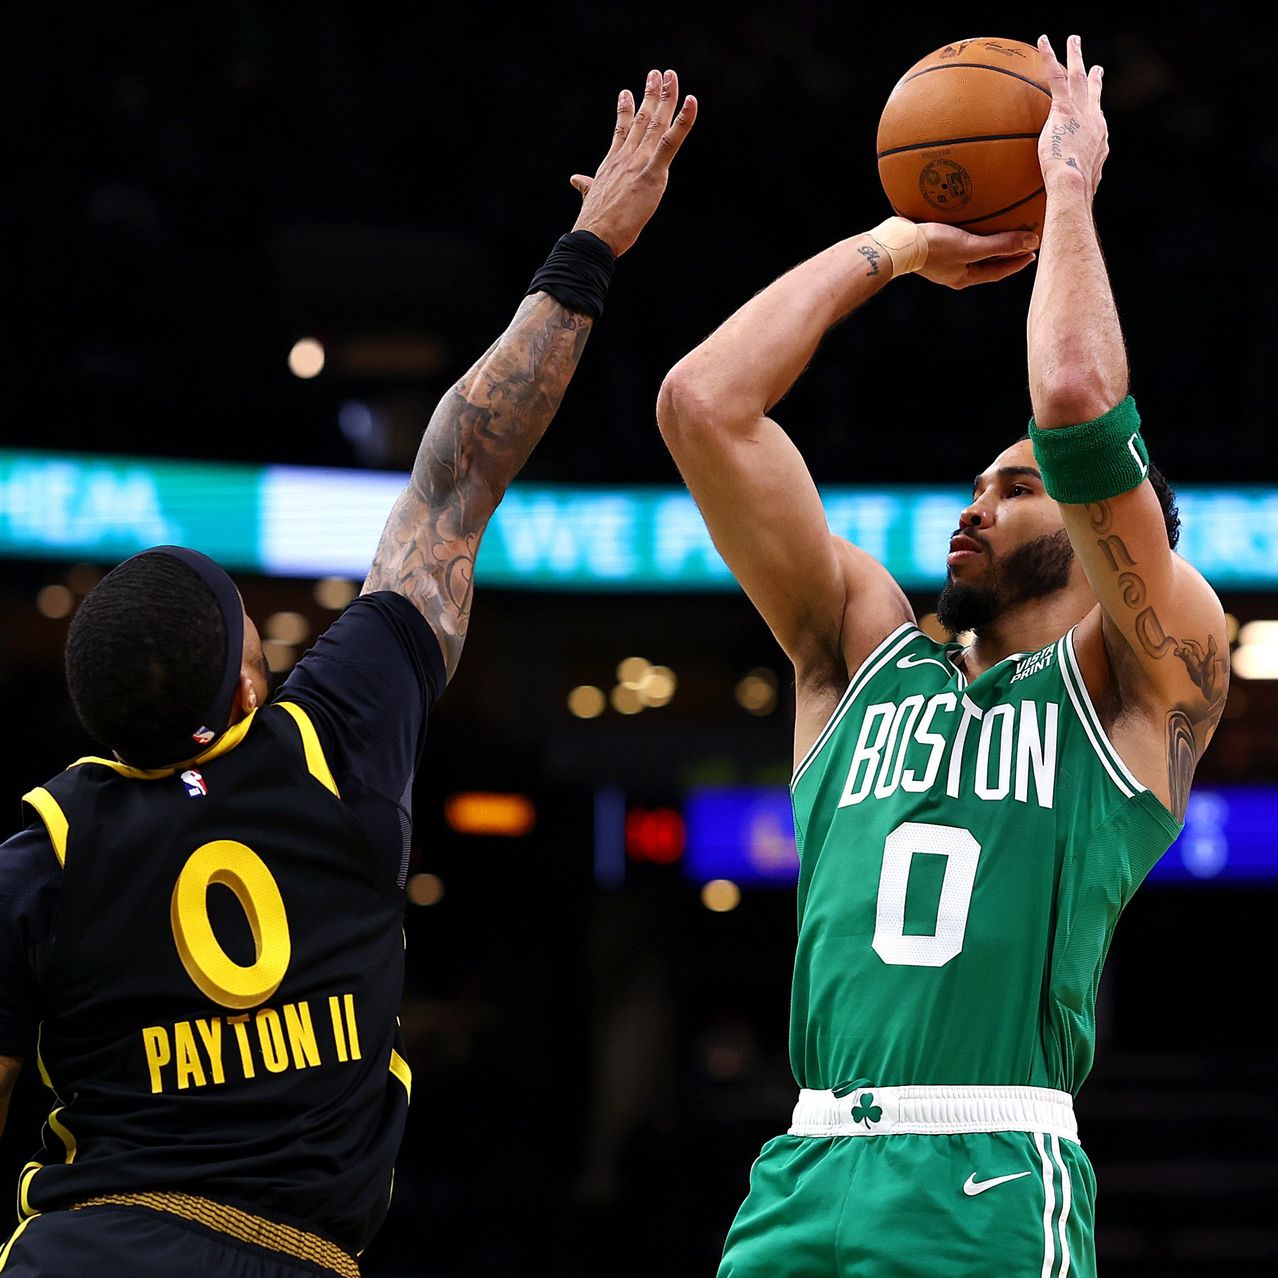 O’Neal Ragu Boston Celtics Tampil Mudah Meski Tuan Rumah “playoff” NBA